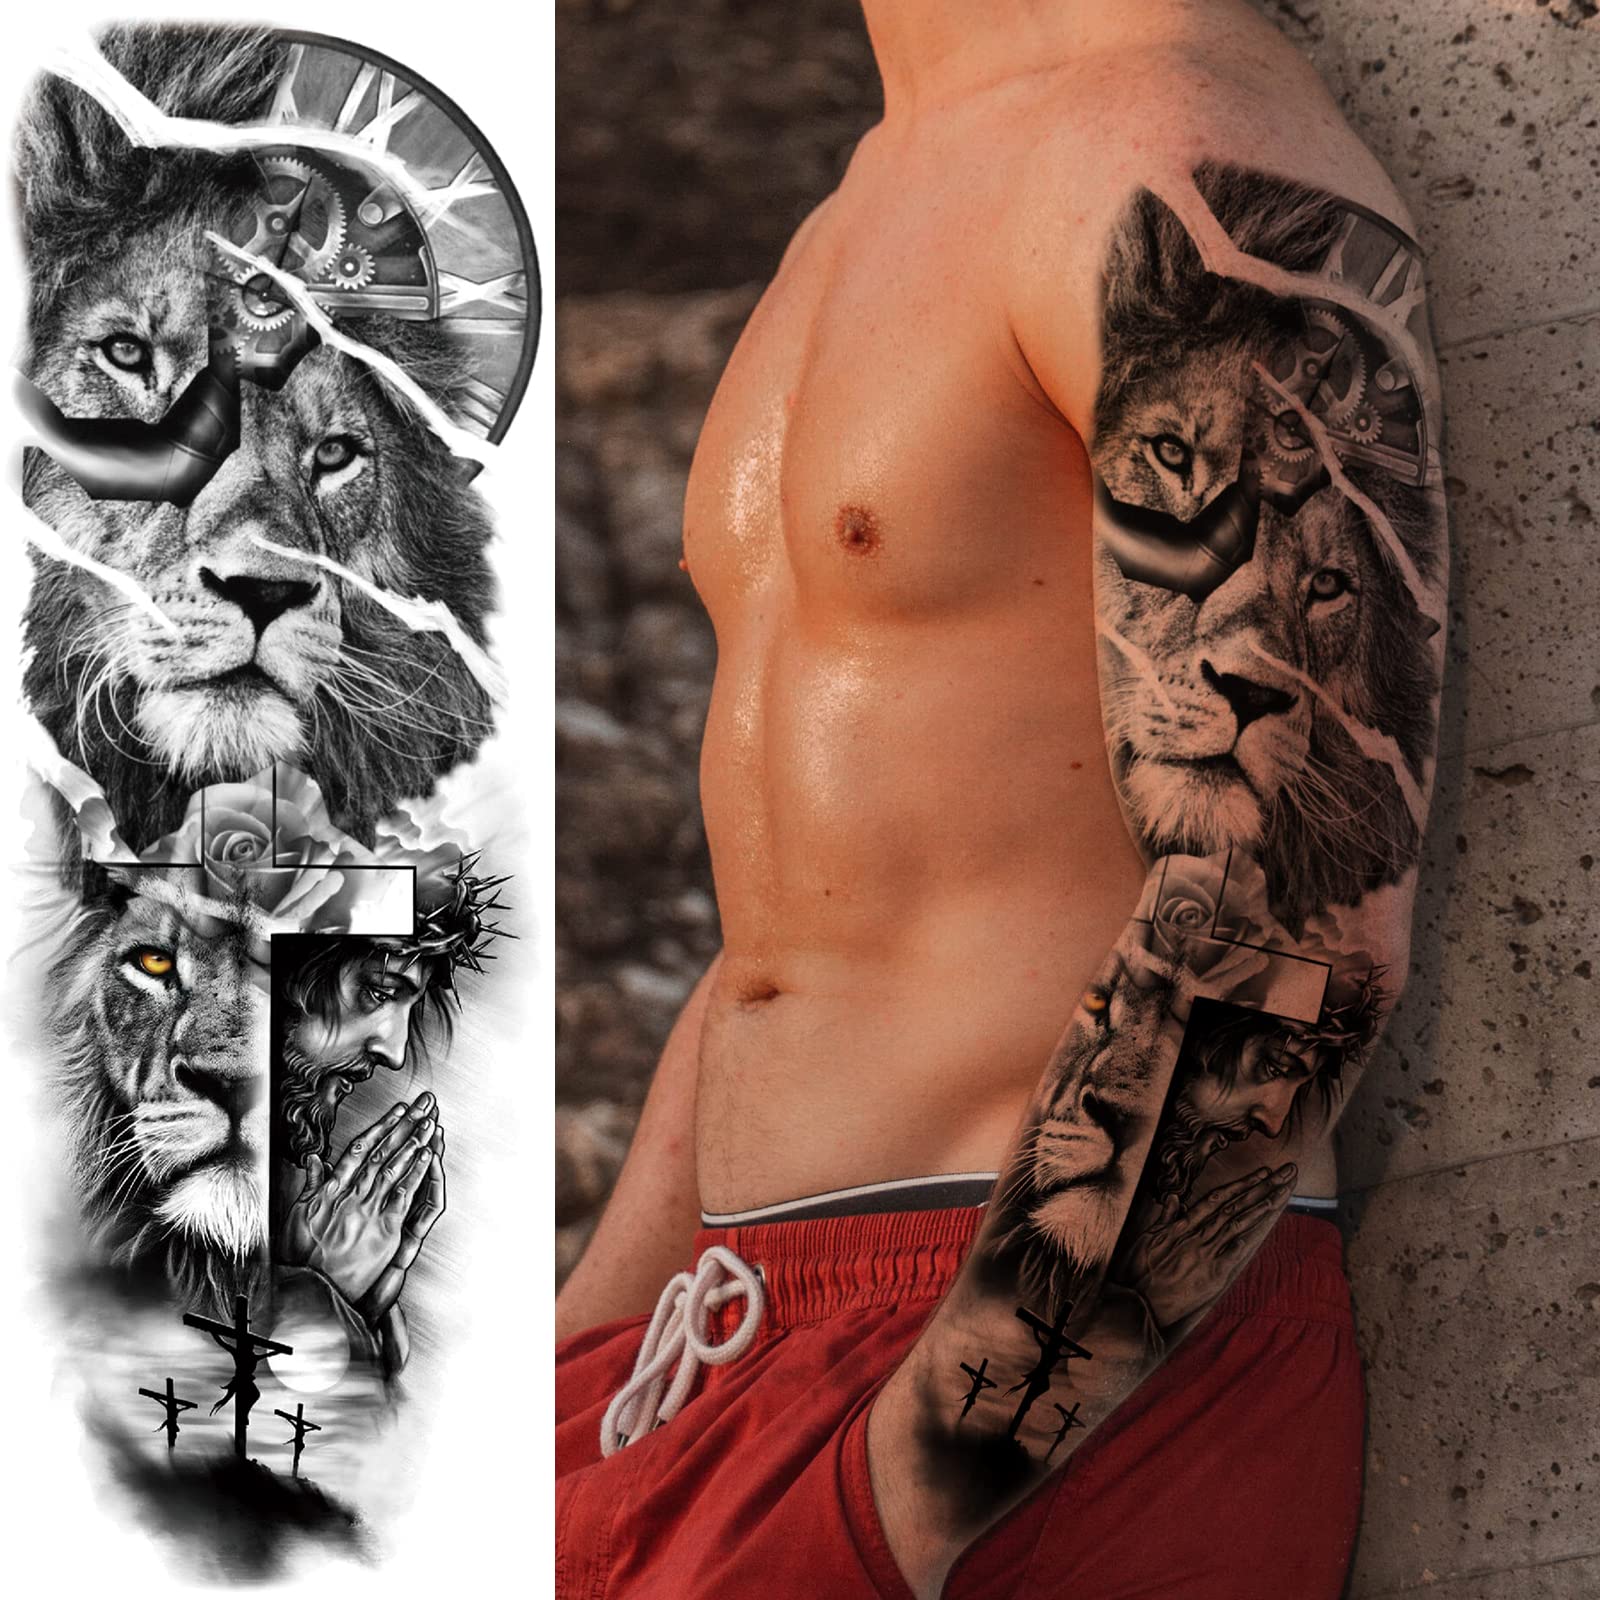 Lion Wolf Fake Tattoos Sleeve Stickers, Full Arm Dragon Animal Tribal Temporary Tattoo Sleeves For Men Women Adults, Long Lasting Large Black Eagle Leopard Temp Tattoo Leg Body Art Makeup, 8-Sheet